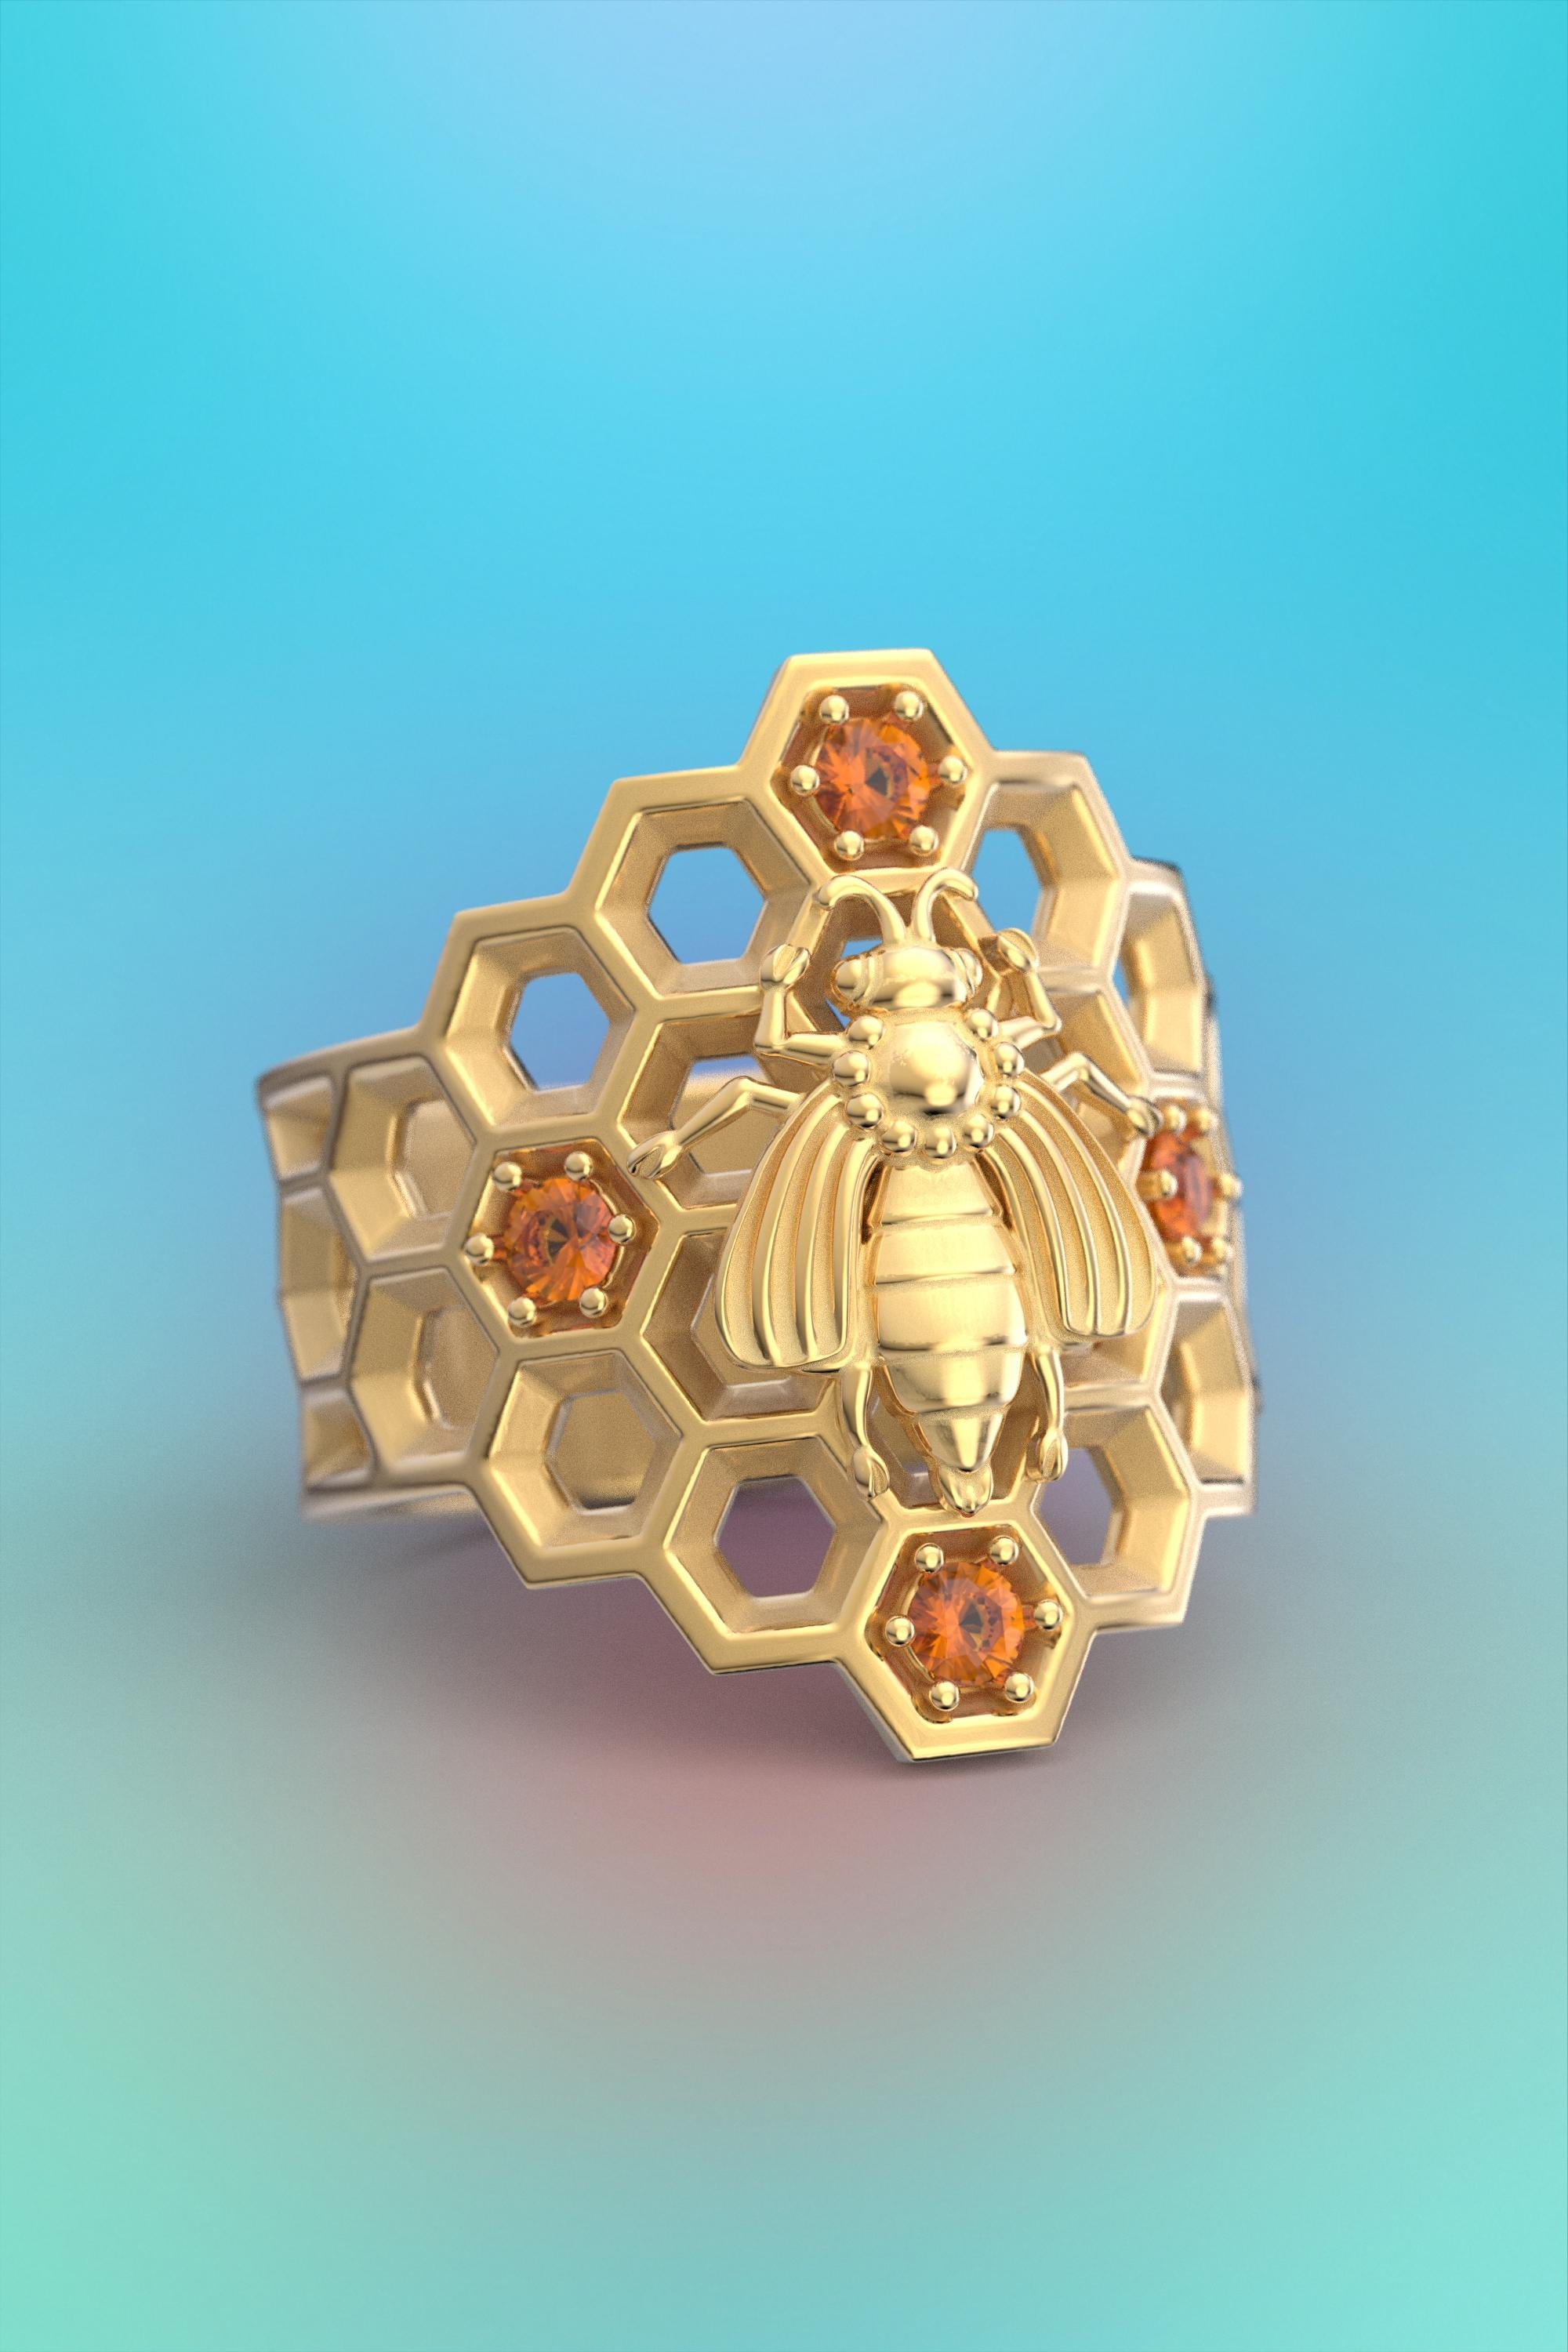 For Sale:   Honeycomb Bee Ring in 18k Solid Gold with natural Orange Spessartite Garnet 8